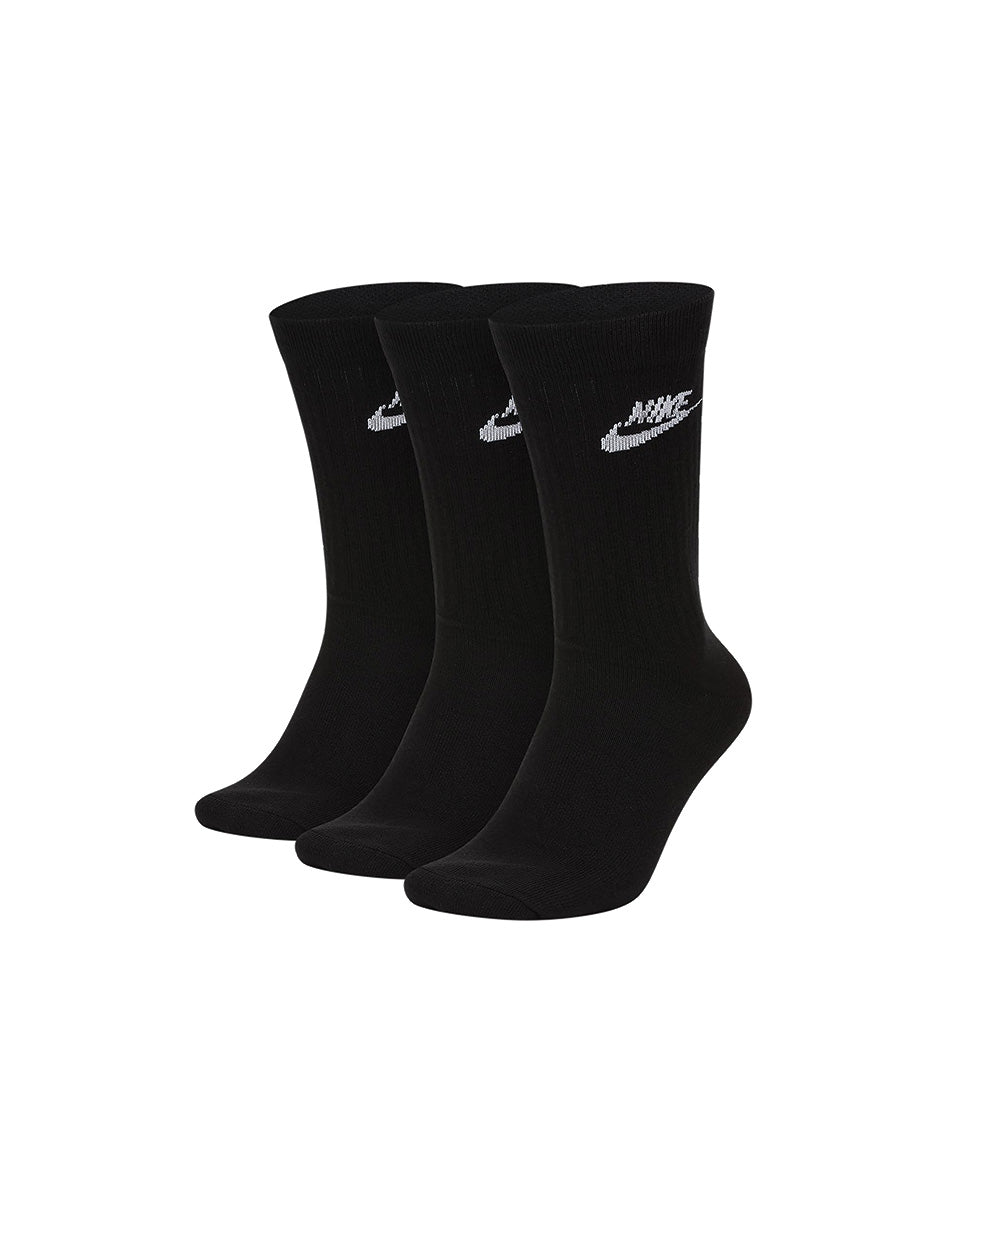 Nike Socks Sportswear Everyday Black and White